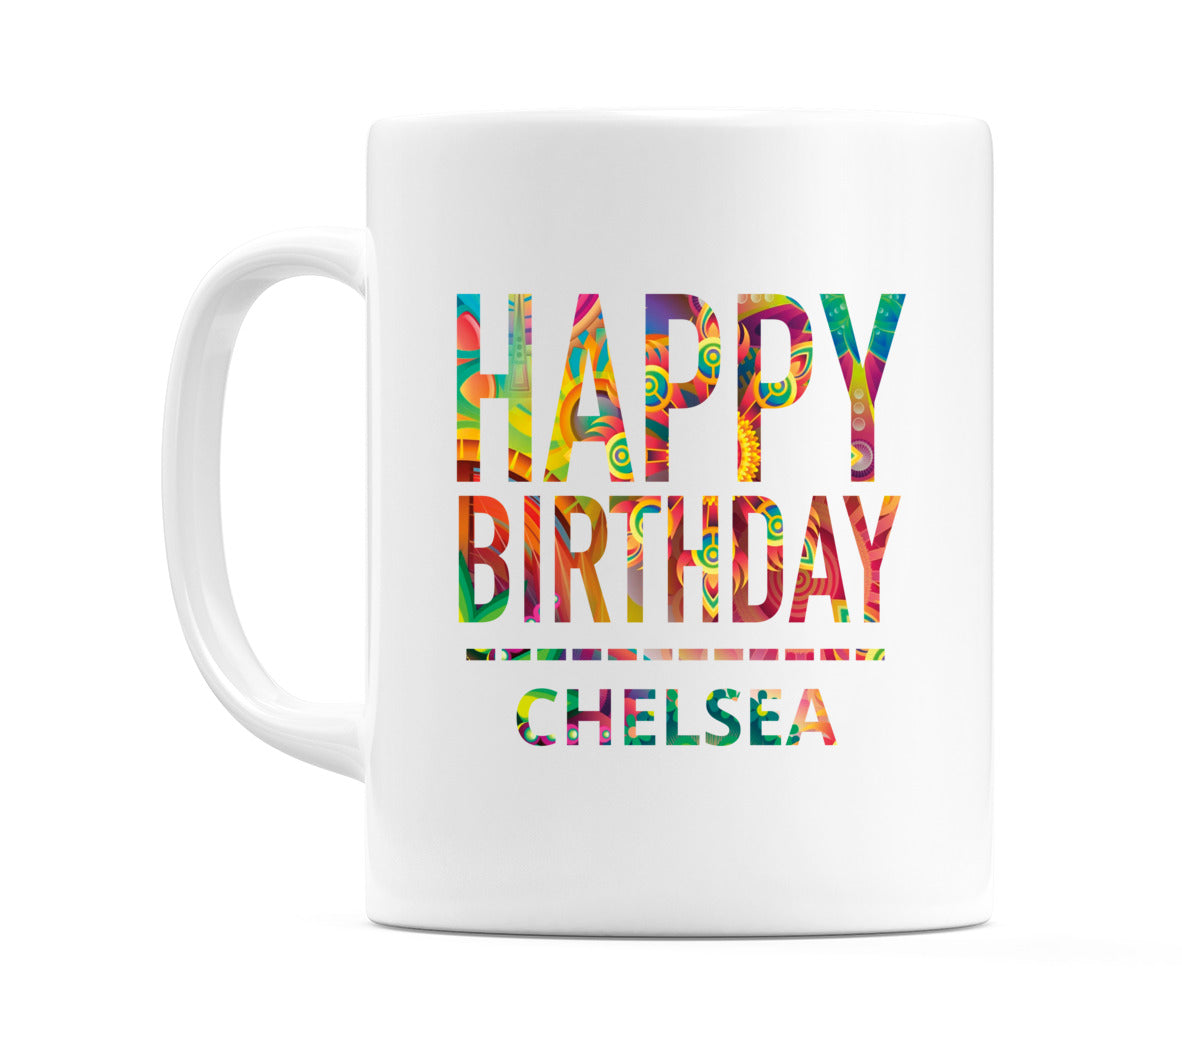 Happy Birthday Chelsea (Tie Dye Effect) Mug Cup by WeDoMugs